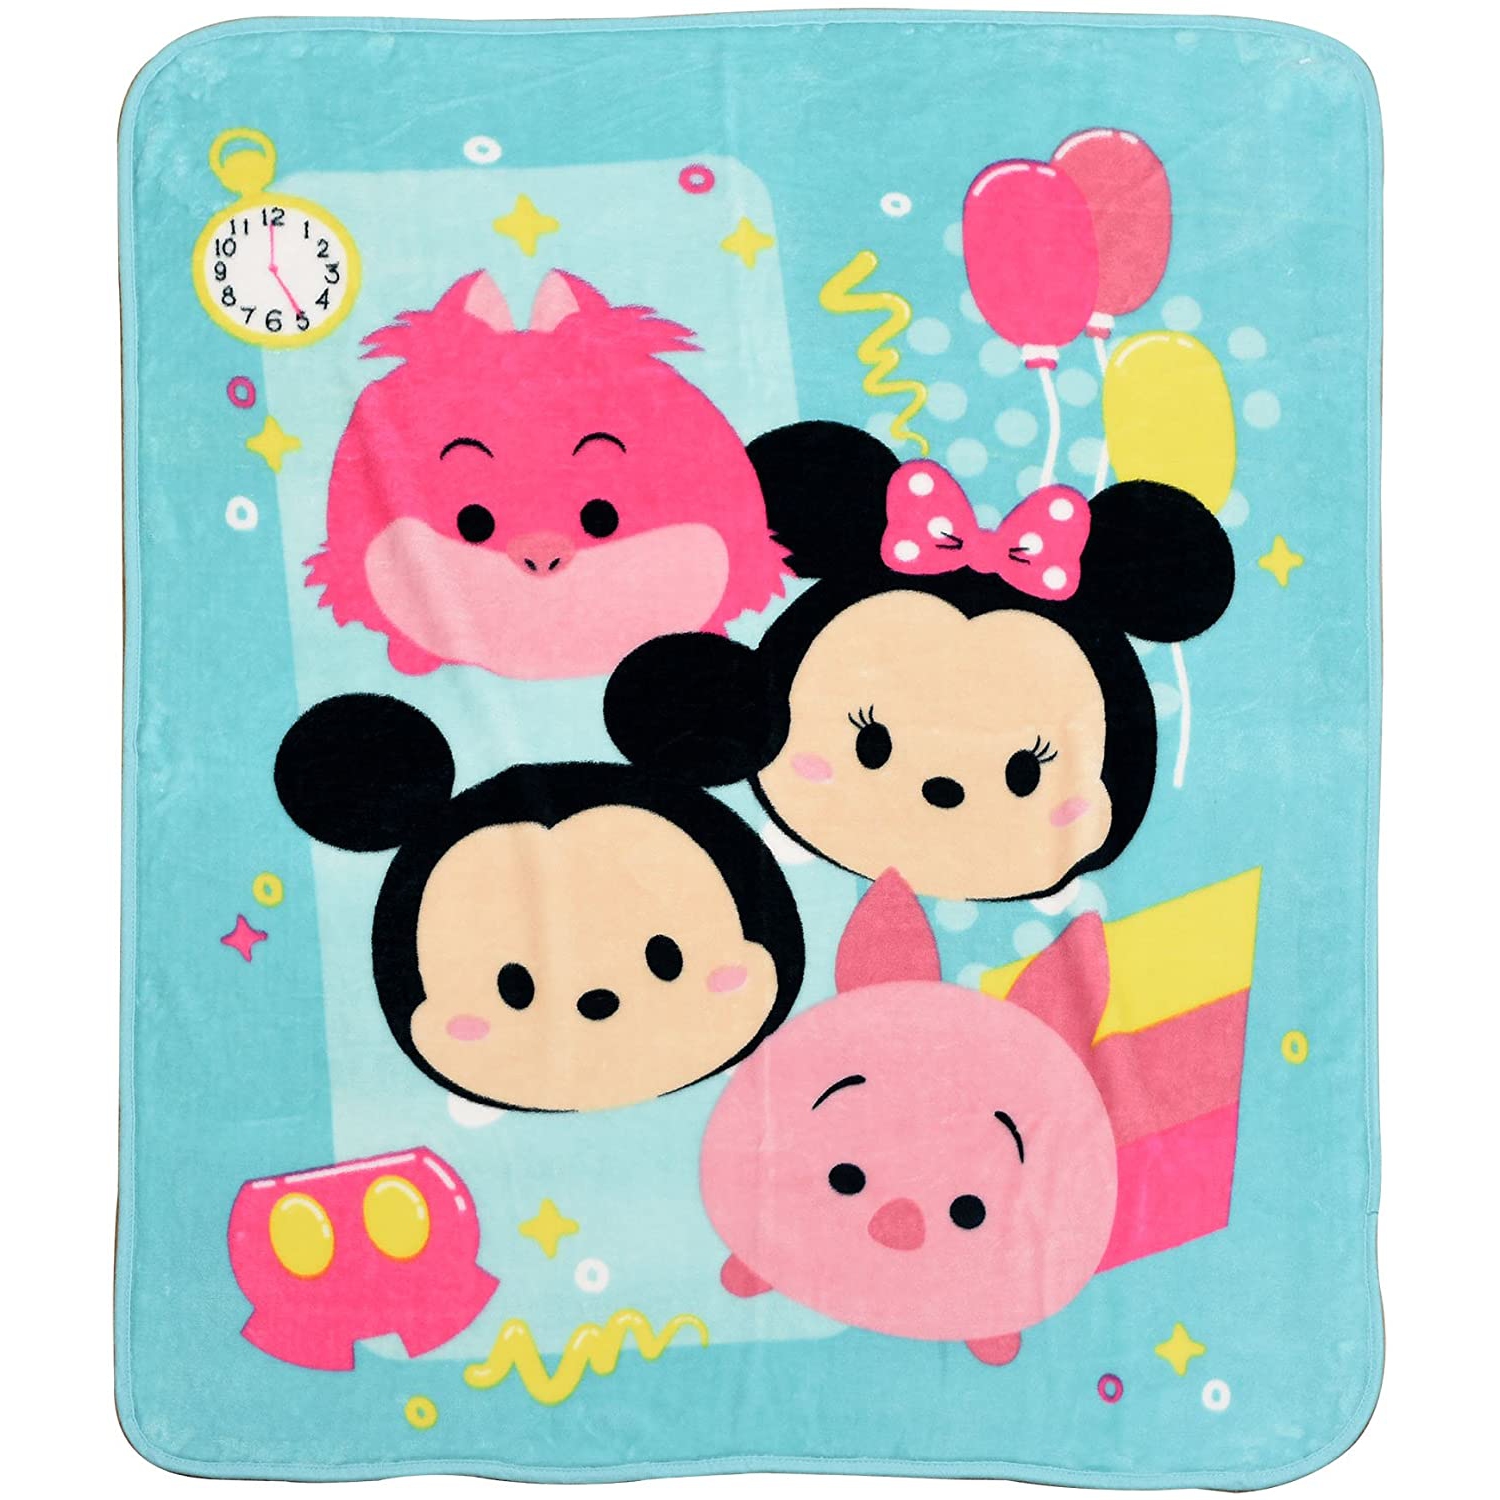 Disney Tsum Tsum Silky Soft Throw Blanket - 40 x 50 Inch